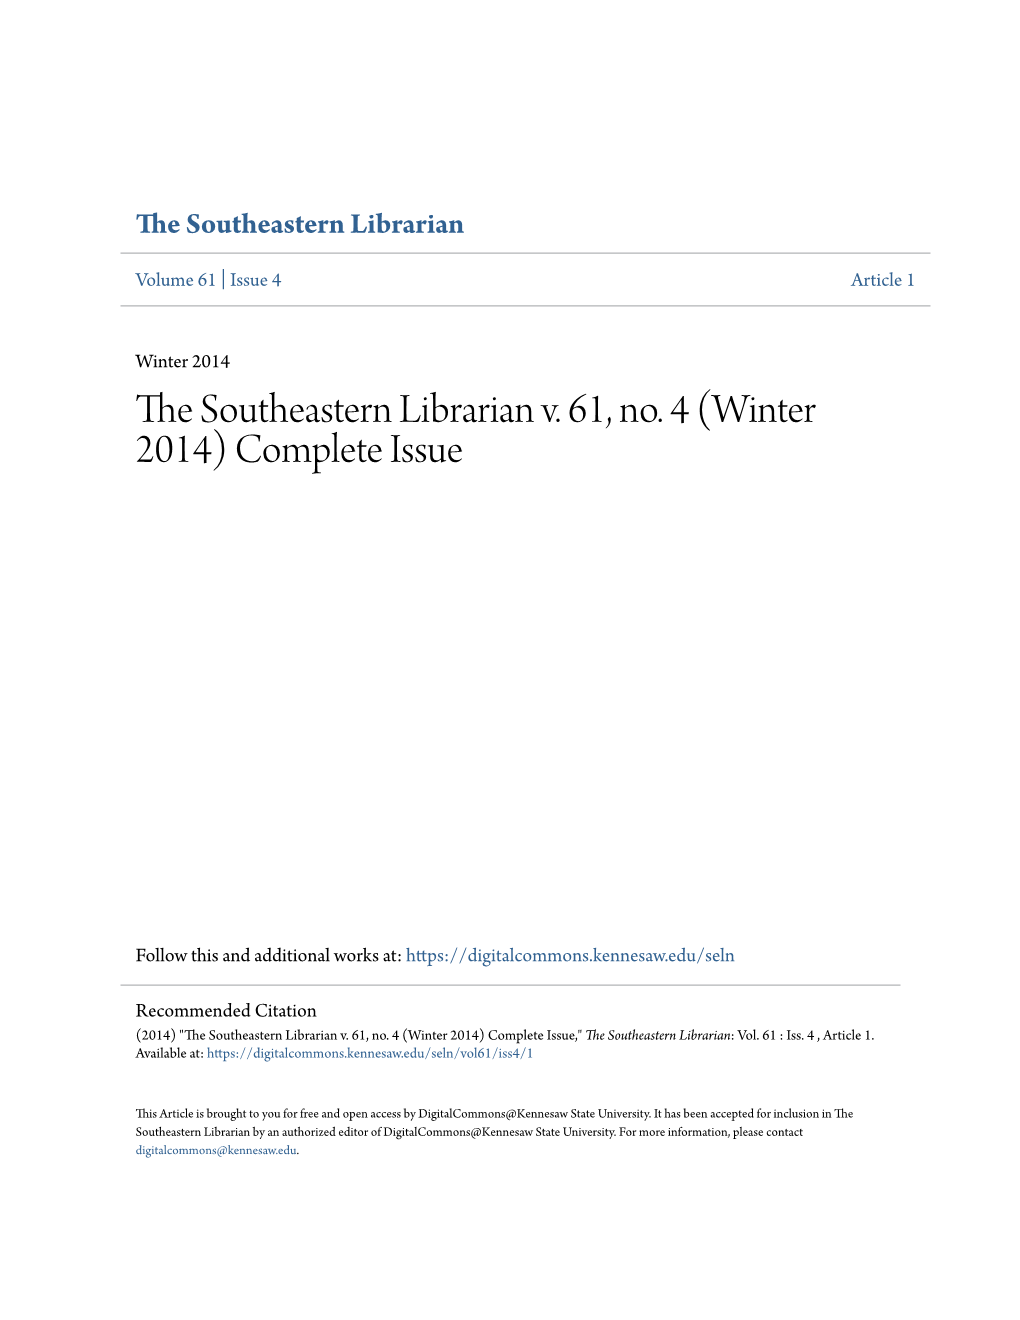 The Southeastern Librarian V. 61, No. 4